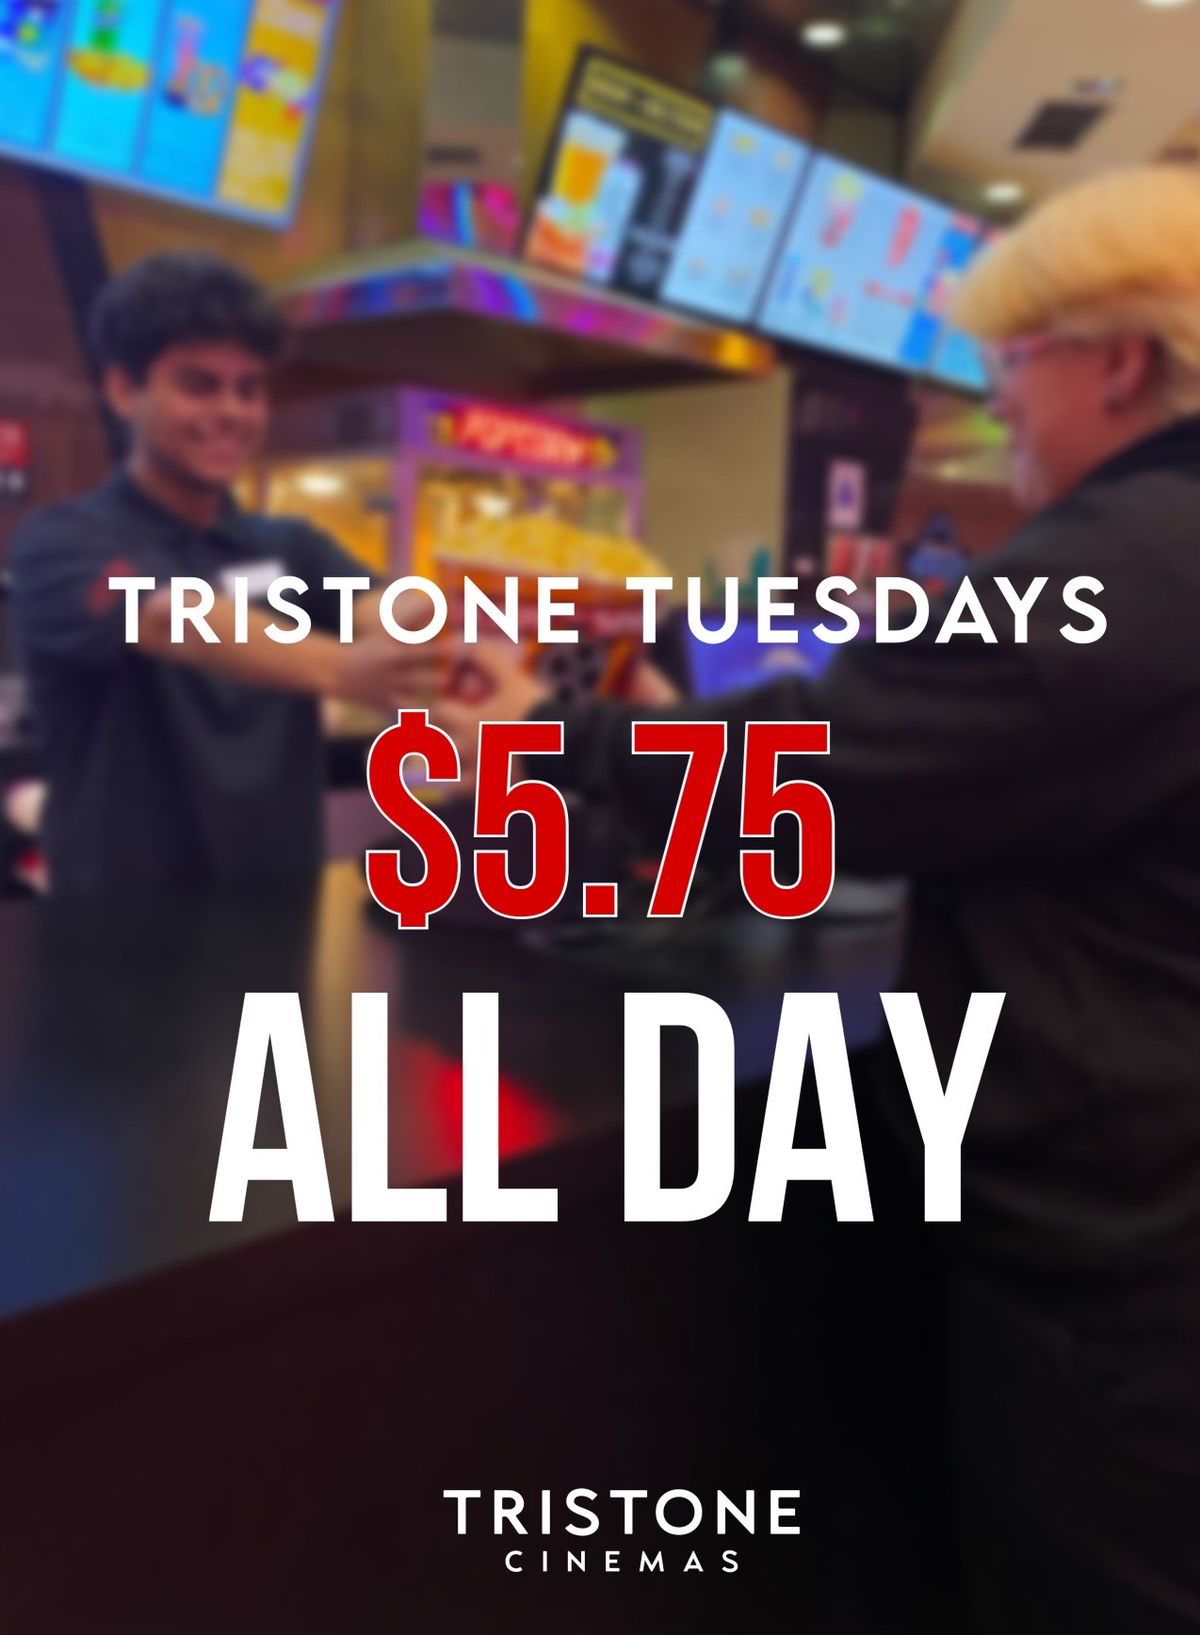 Tristone Tuesday